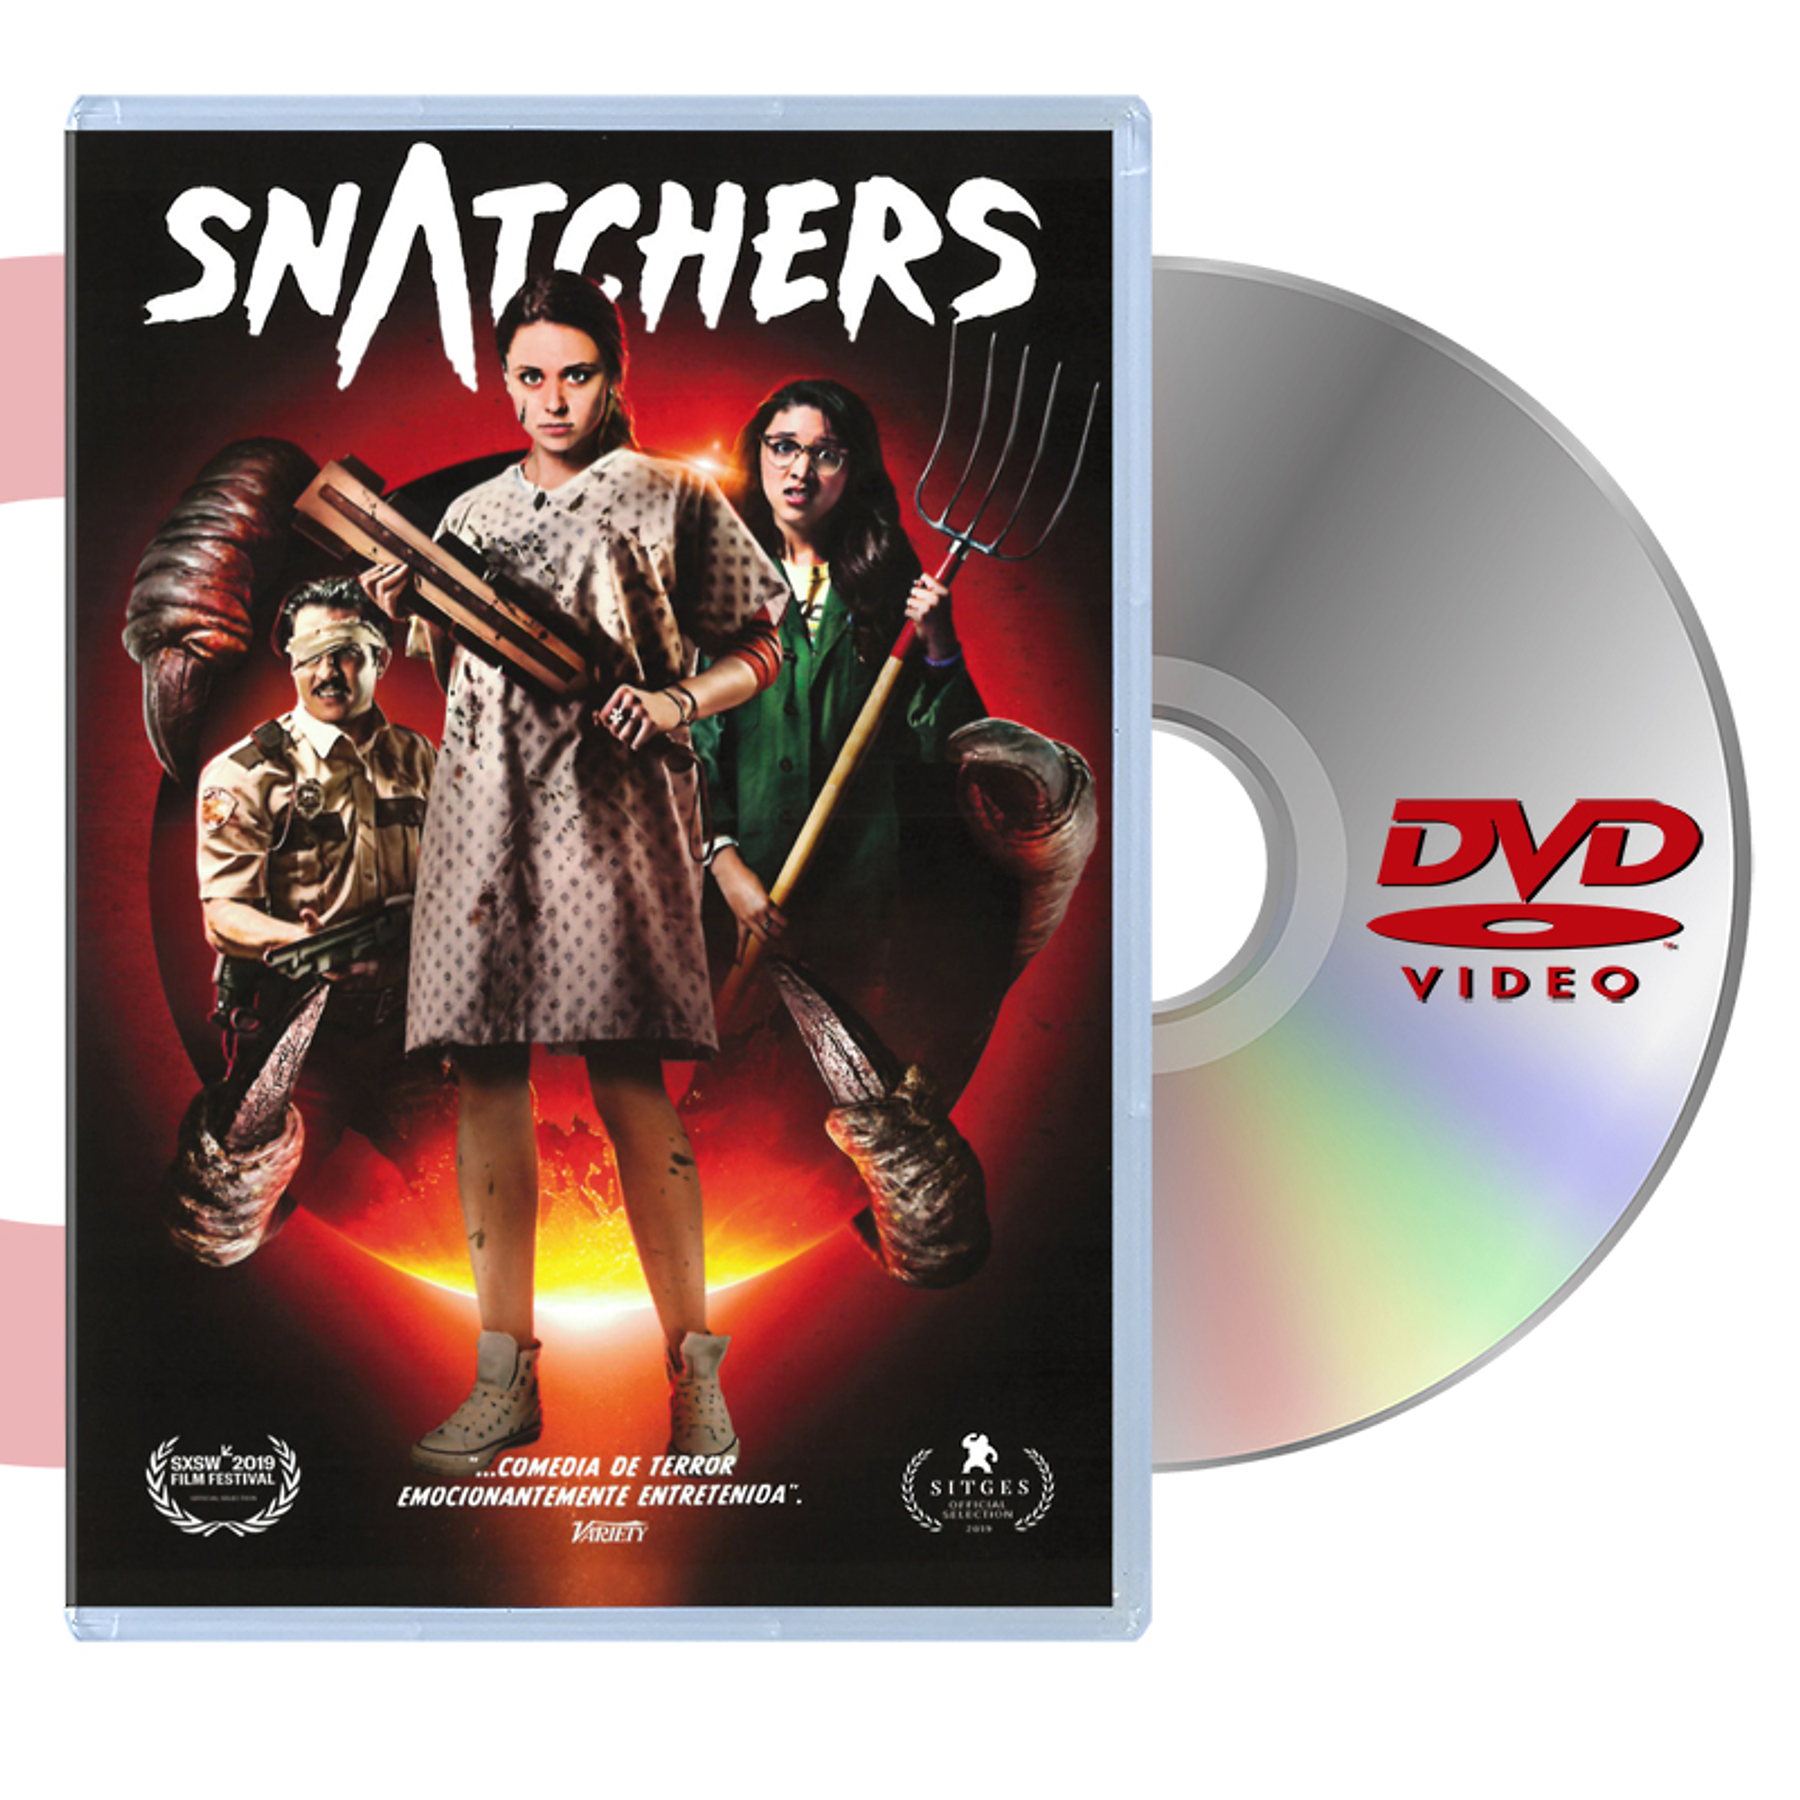 DVD SNATCHERS